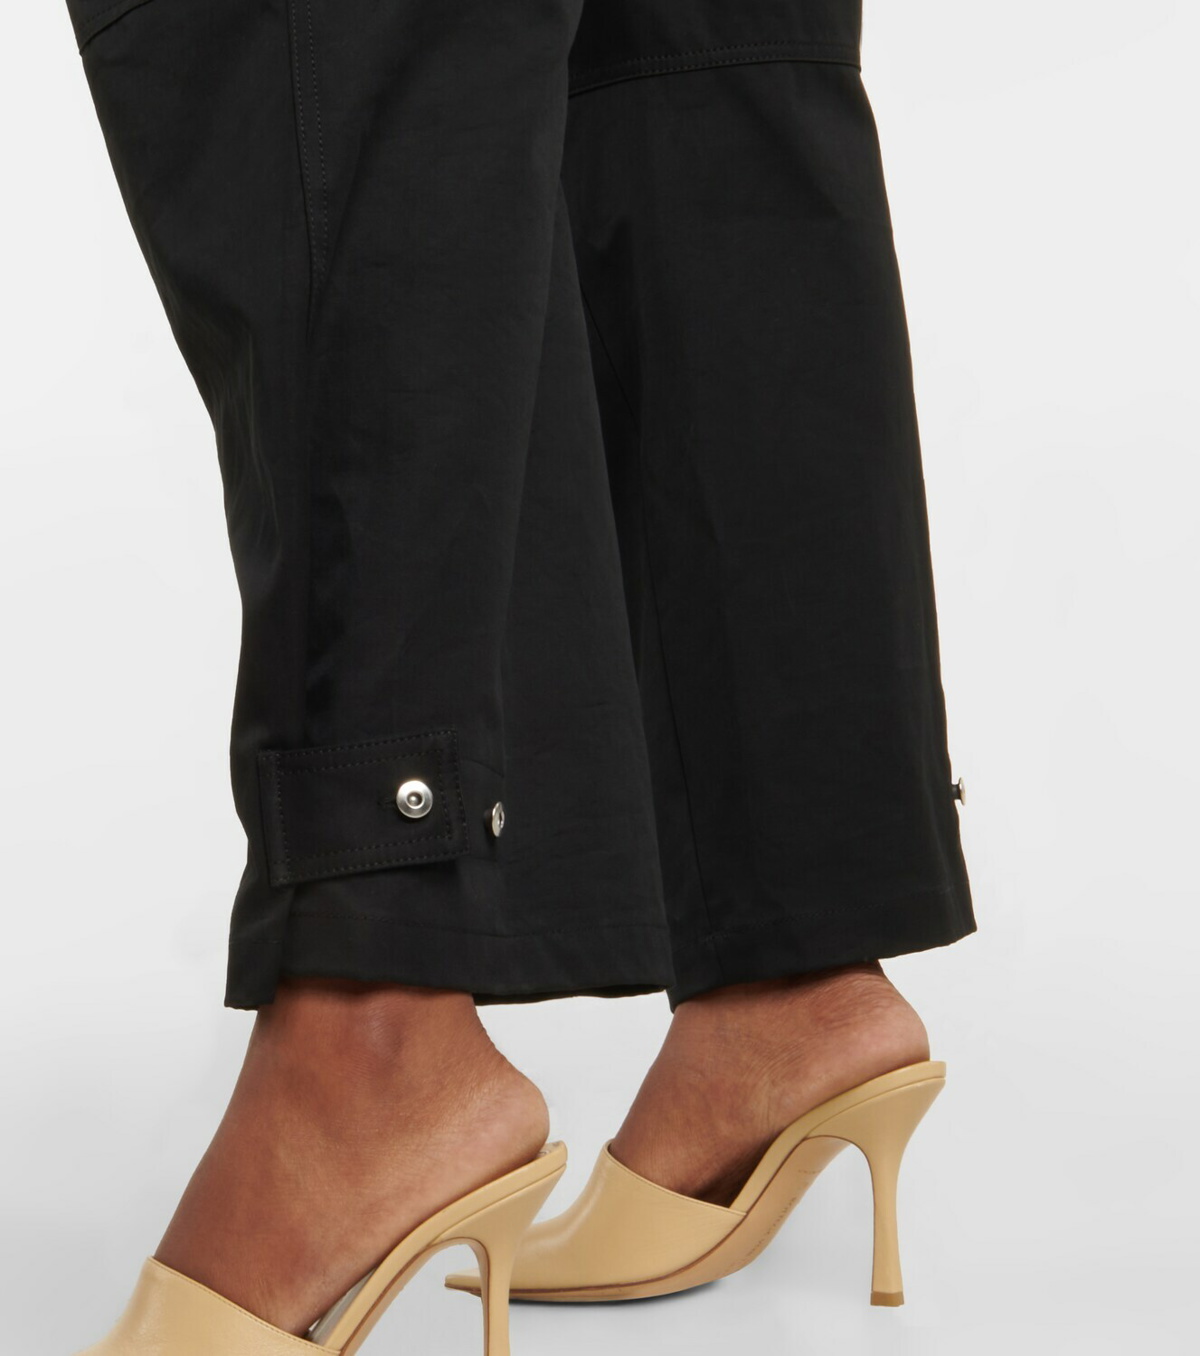 High-rise cotton-blend stirrup pants in black - Bottega Veneta